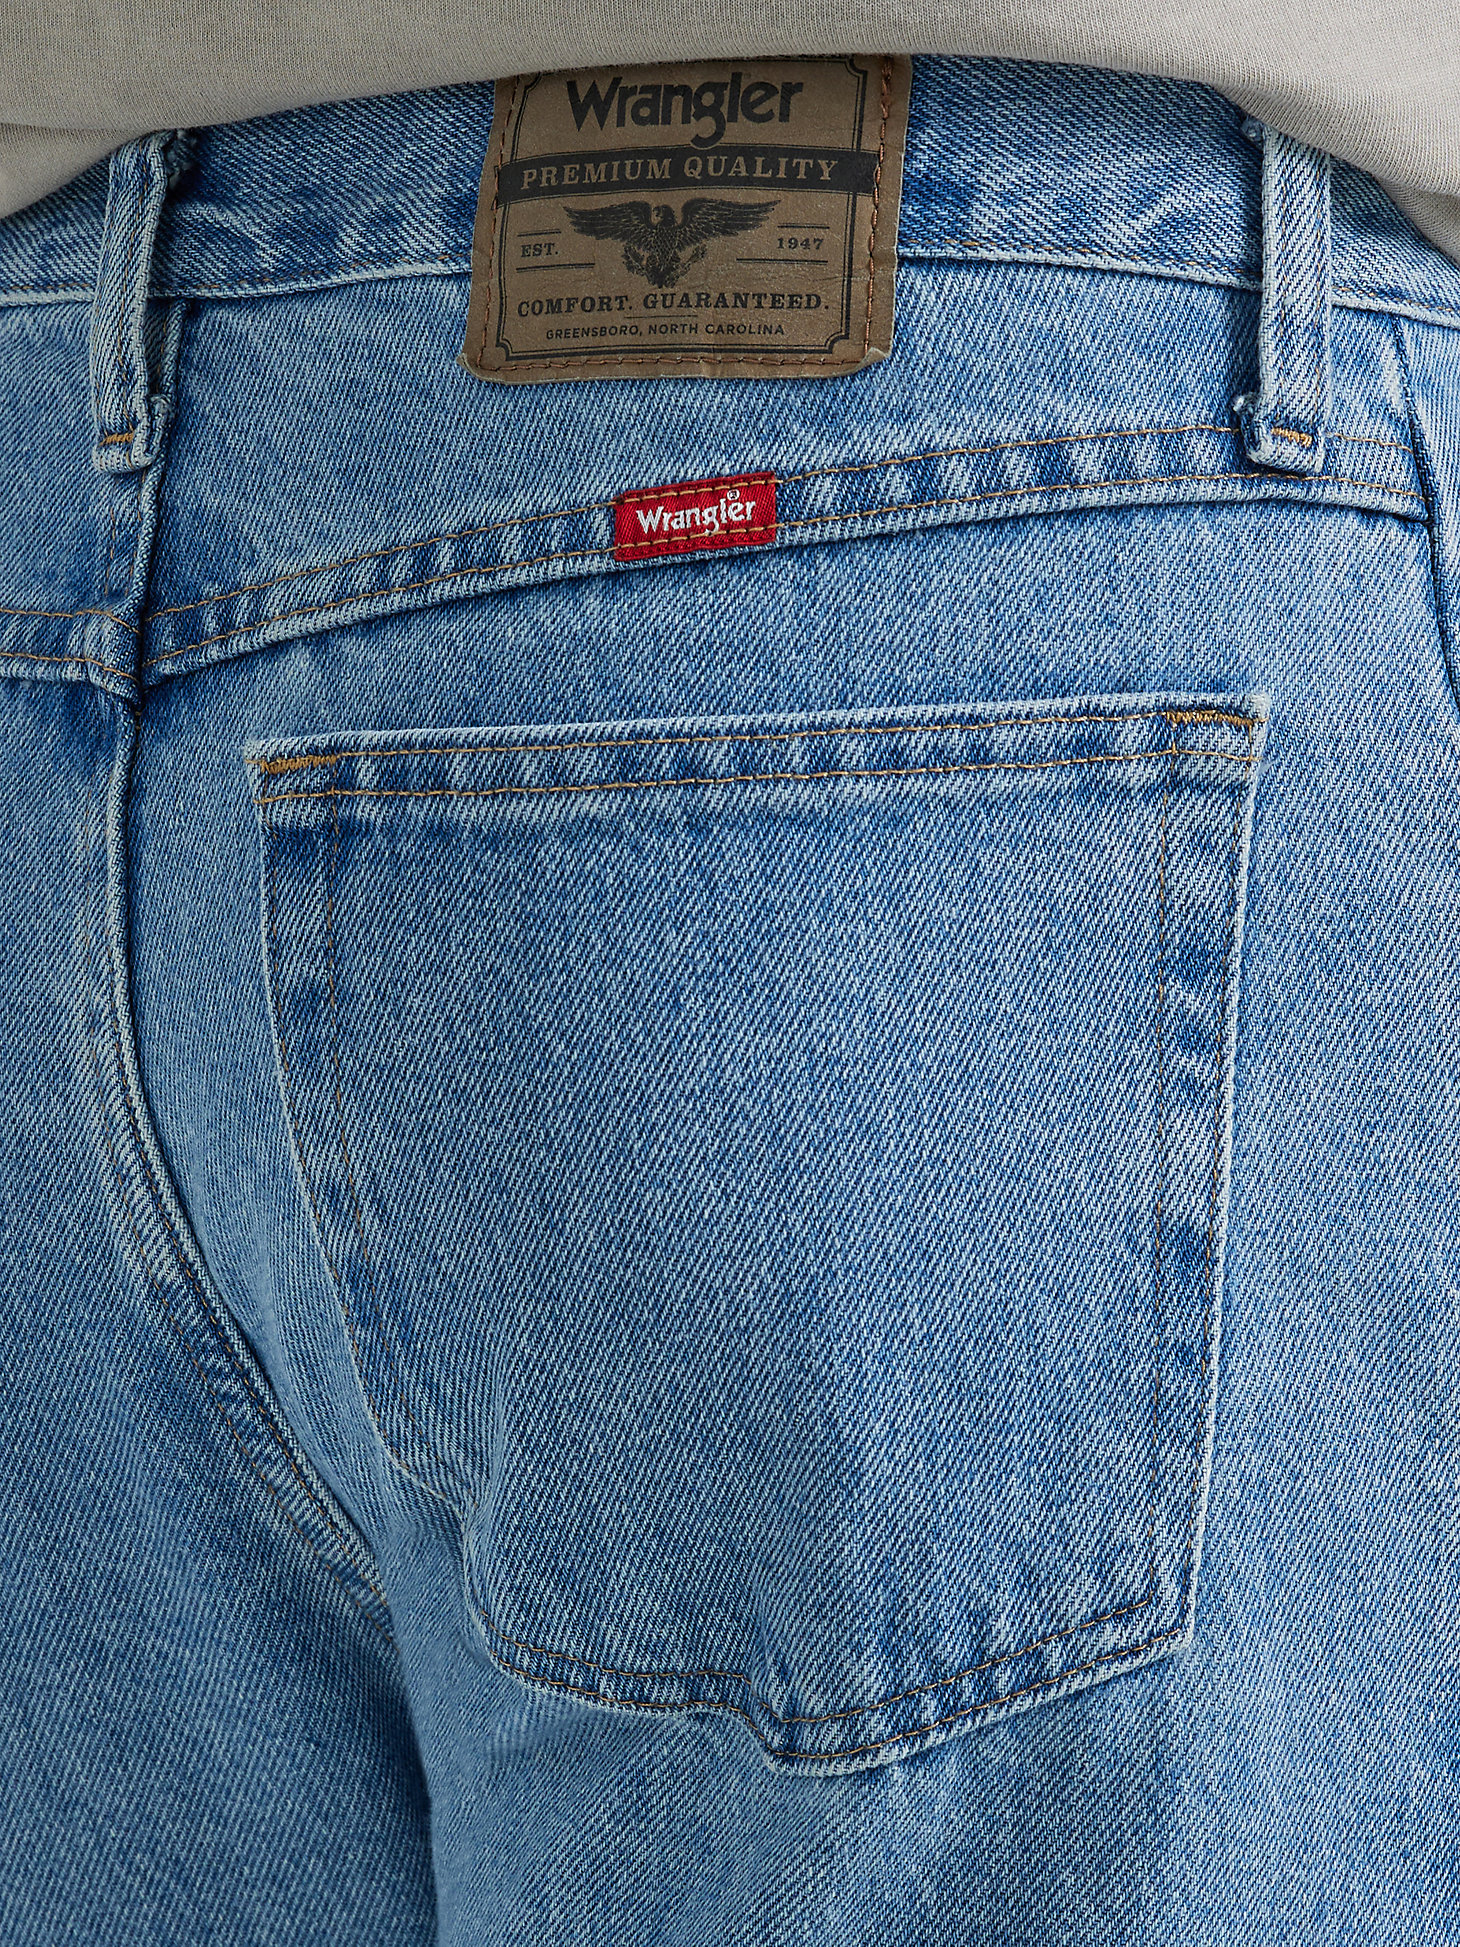 Wrangler® Five Star Premium Denim Regular Fit Jean in Lt Stonewash alternative view 2